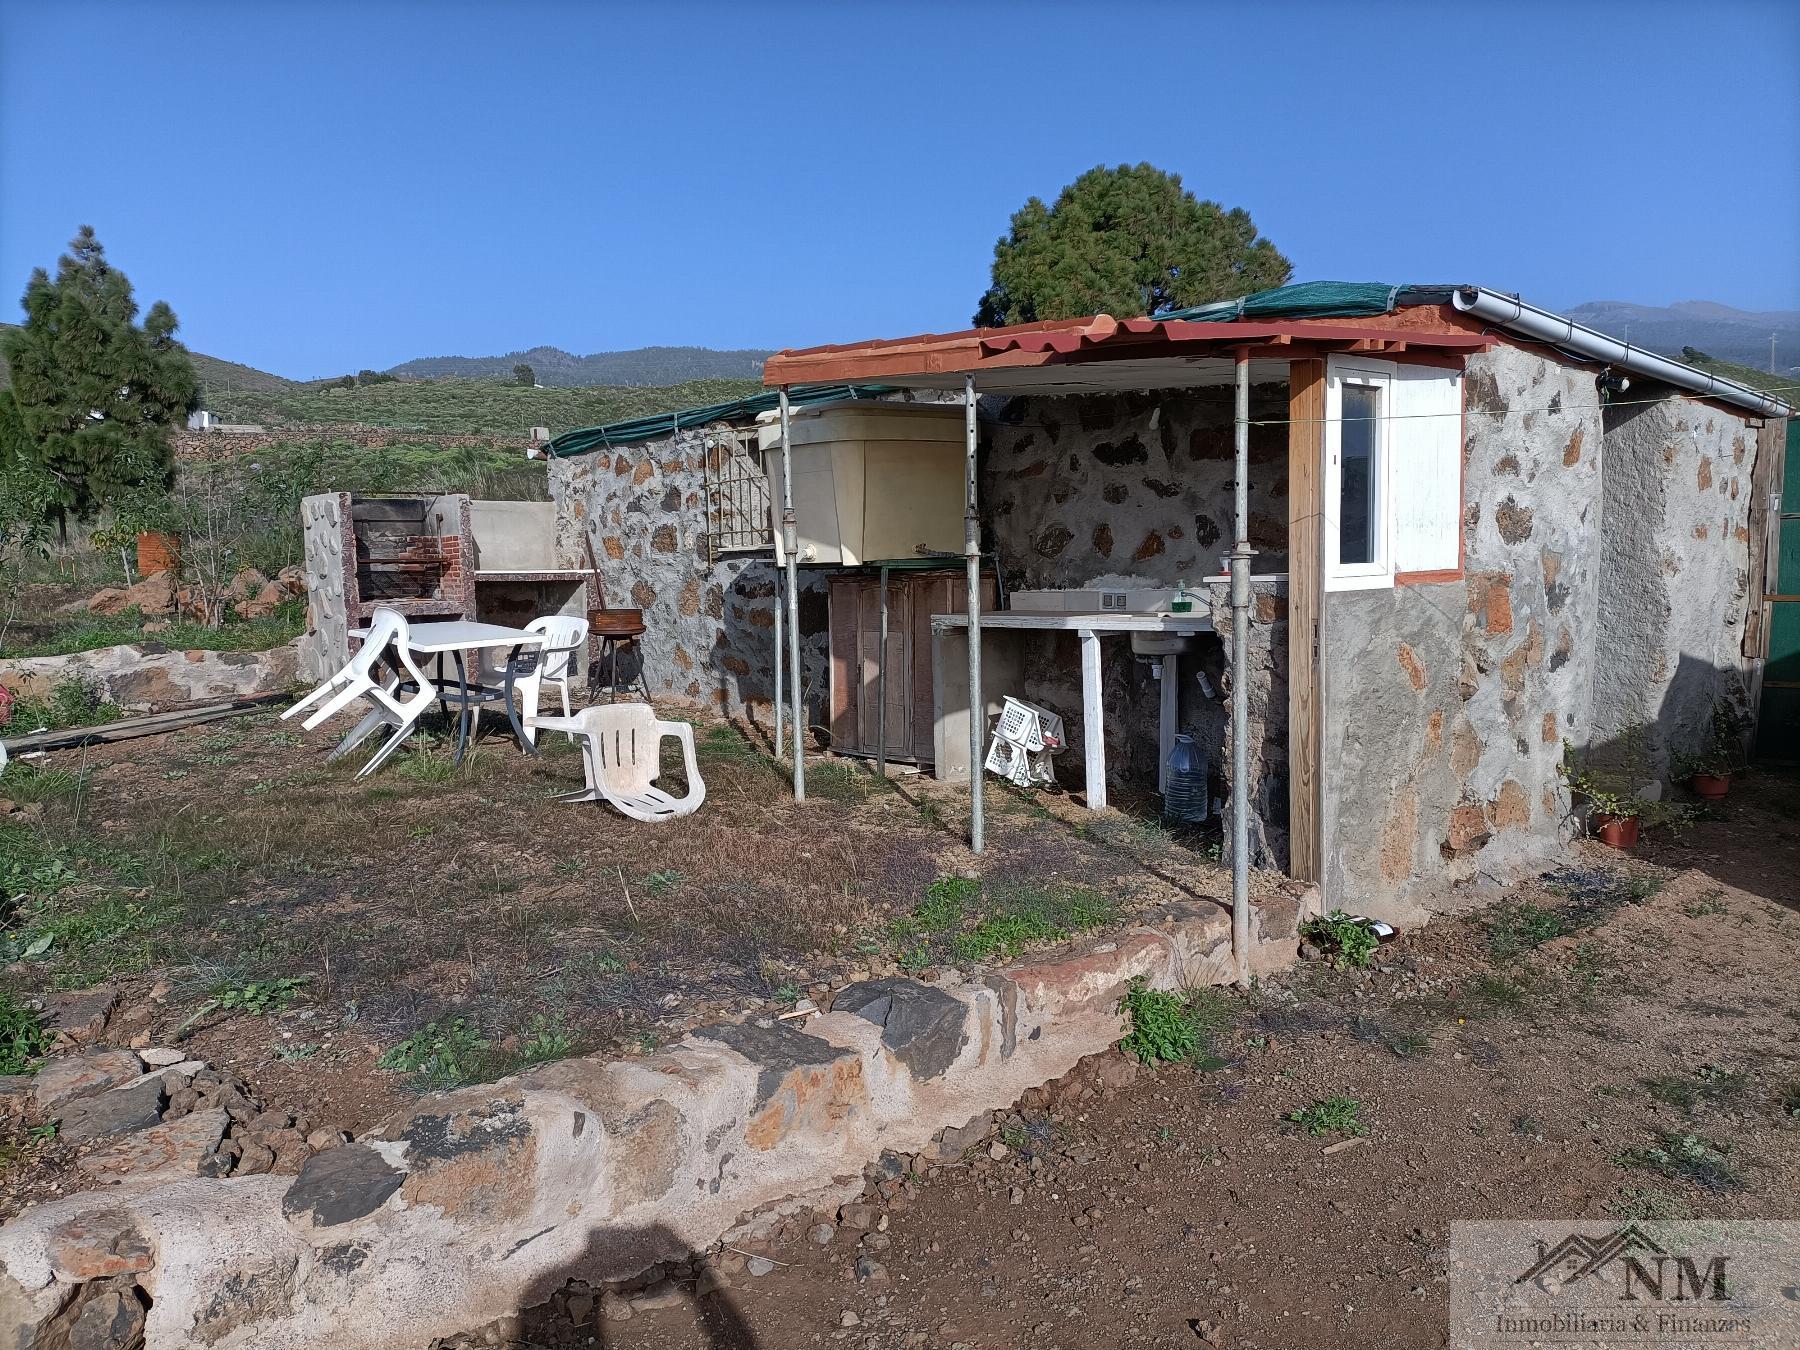 Vente de propriété rurale dans Granadilla de Abona